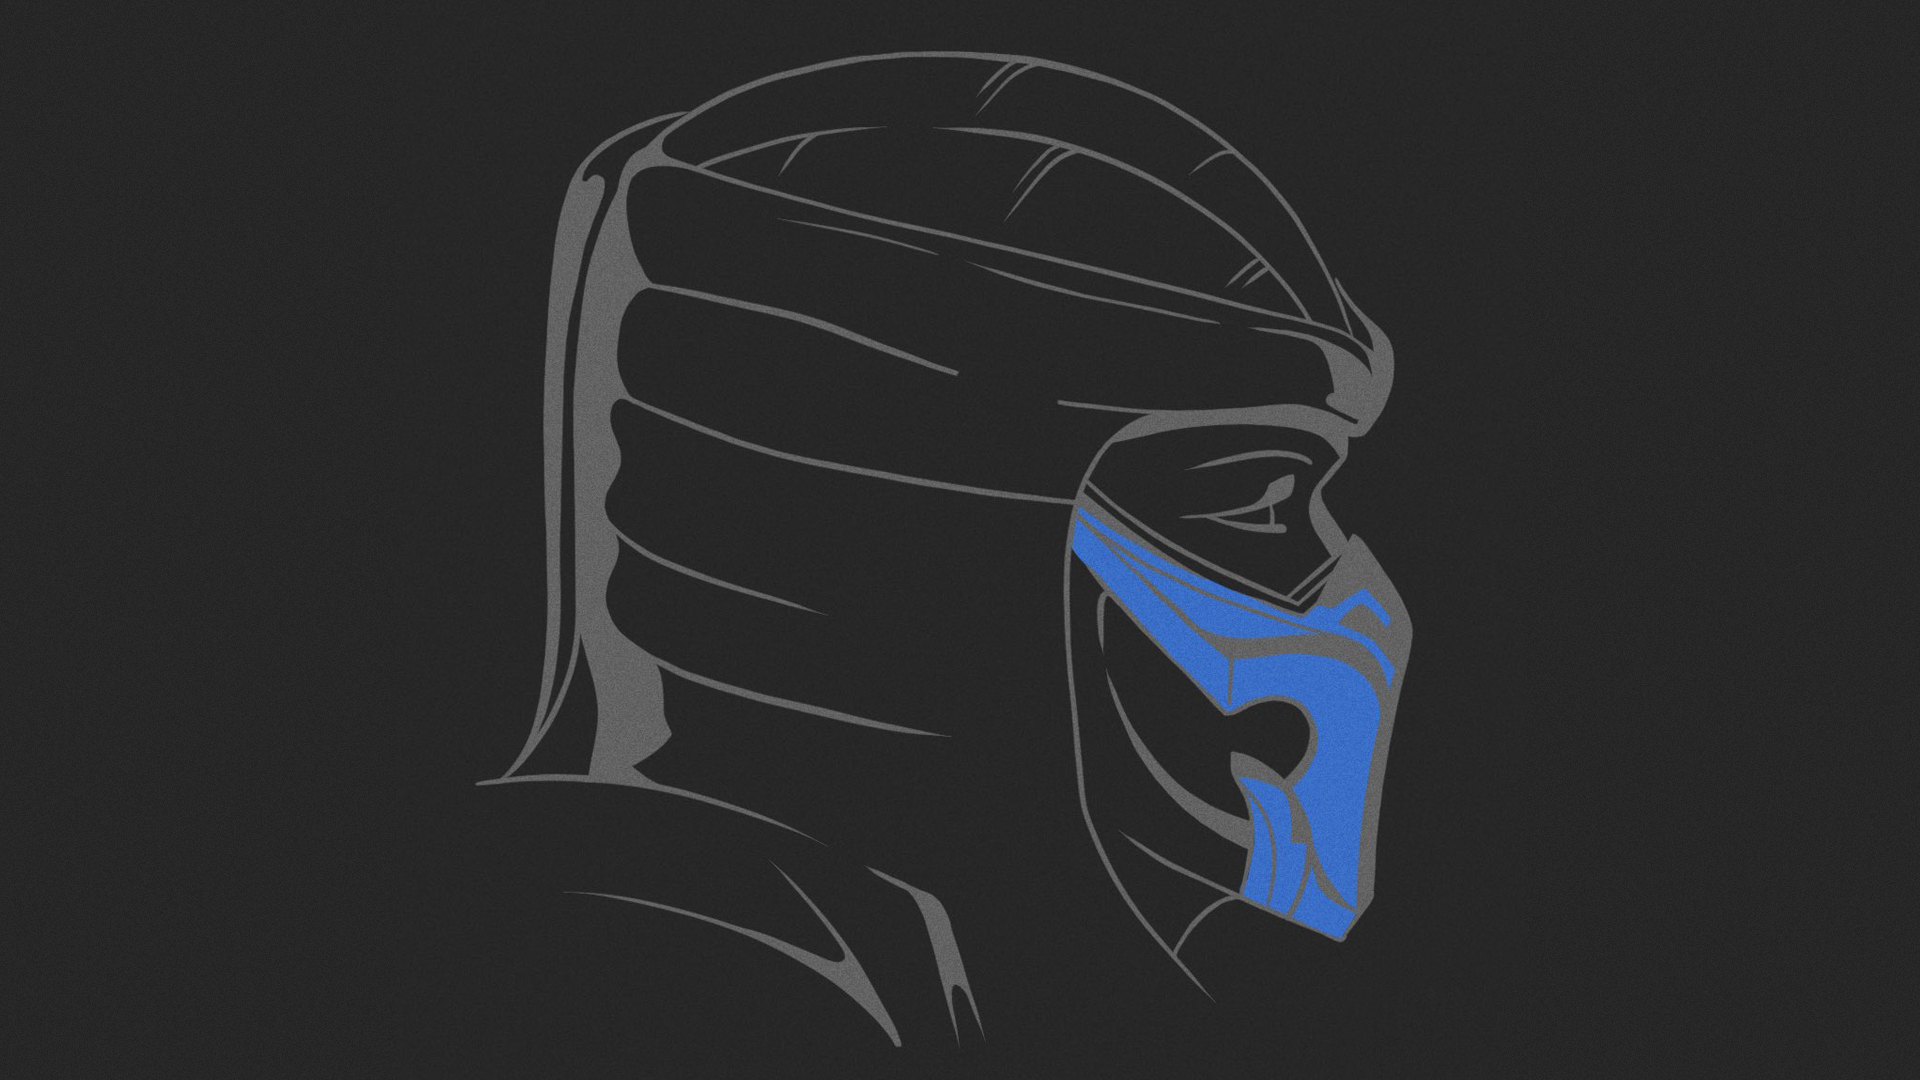 Mortal Kombat background - Sub-Zero's head